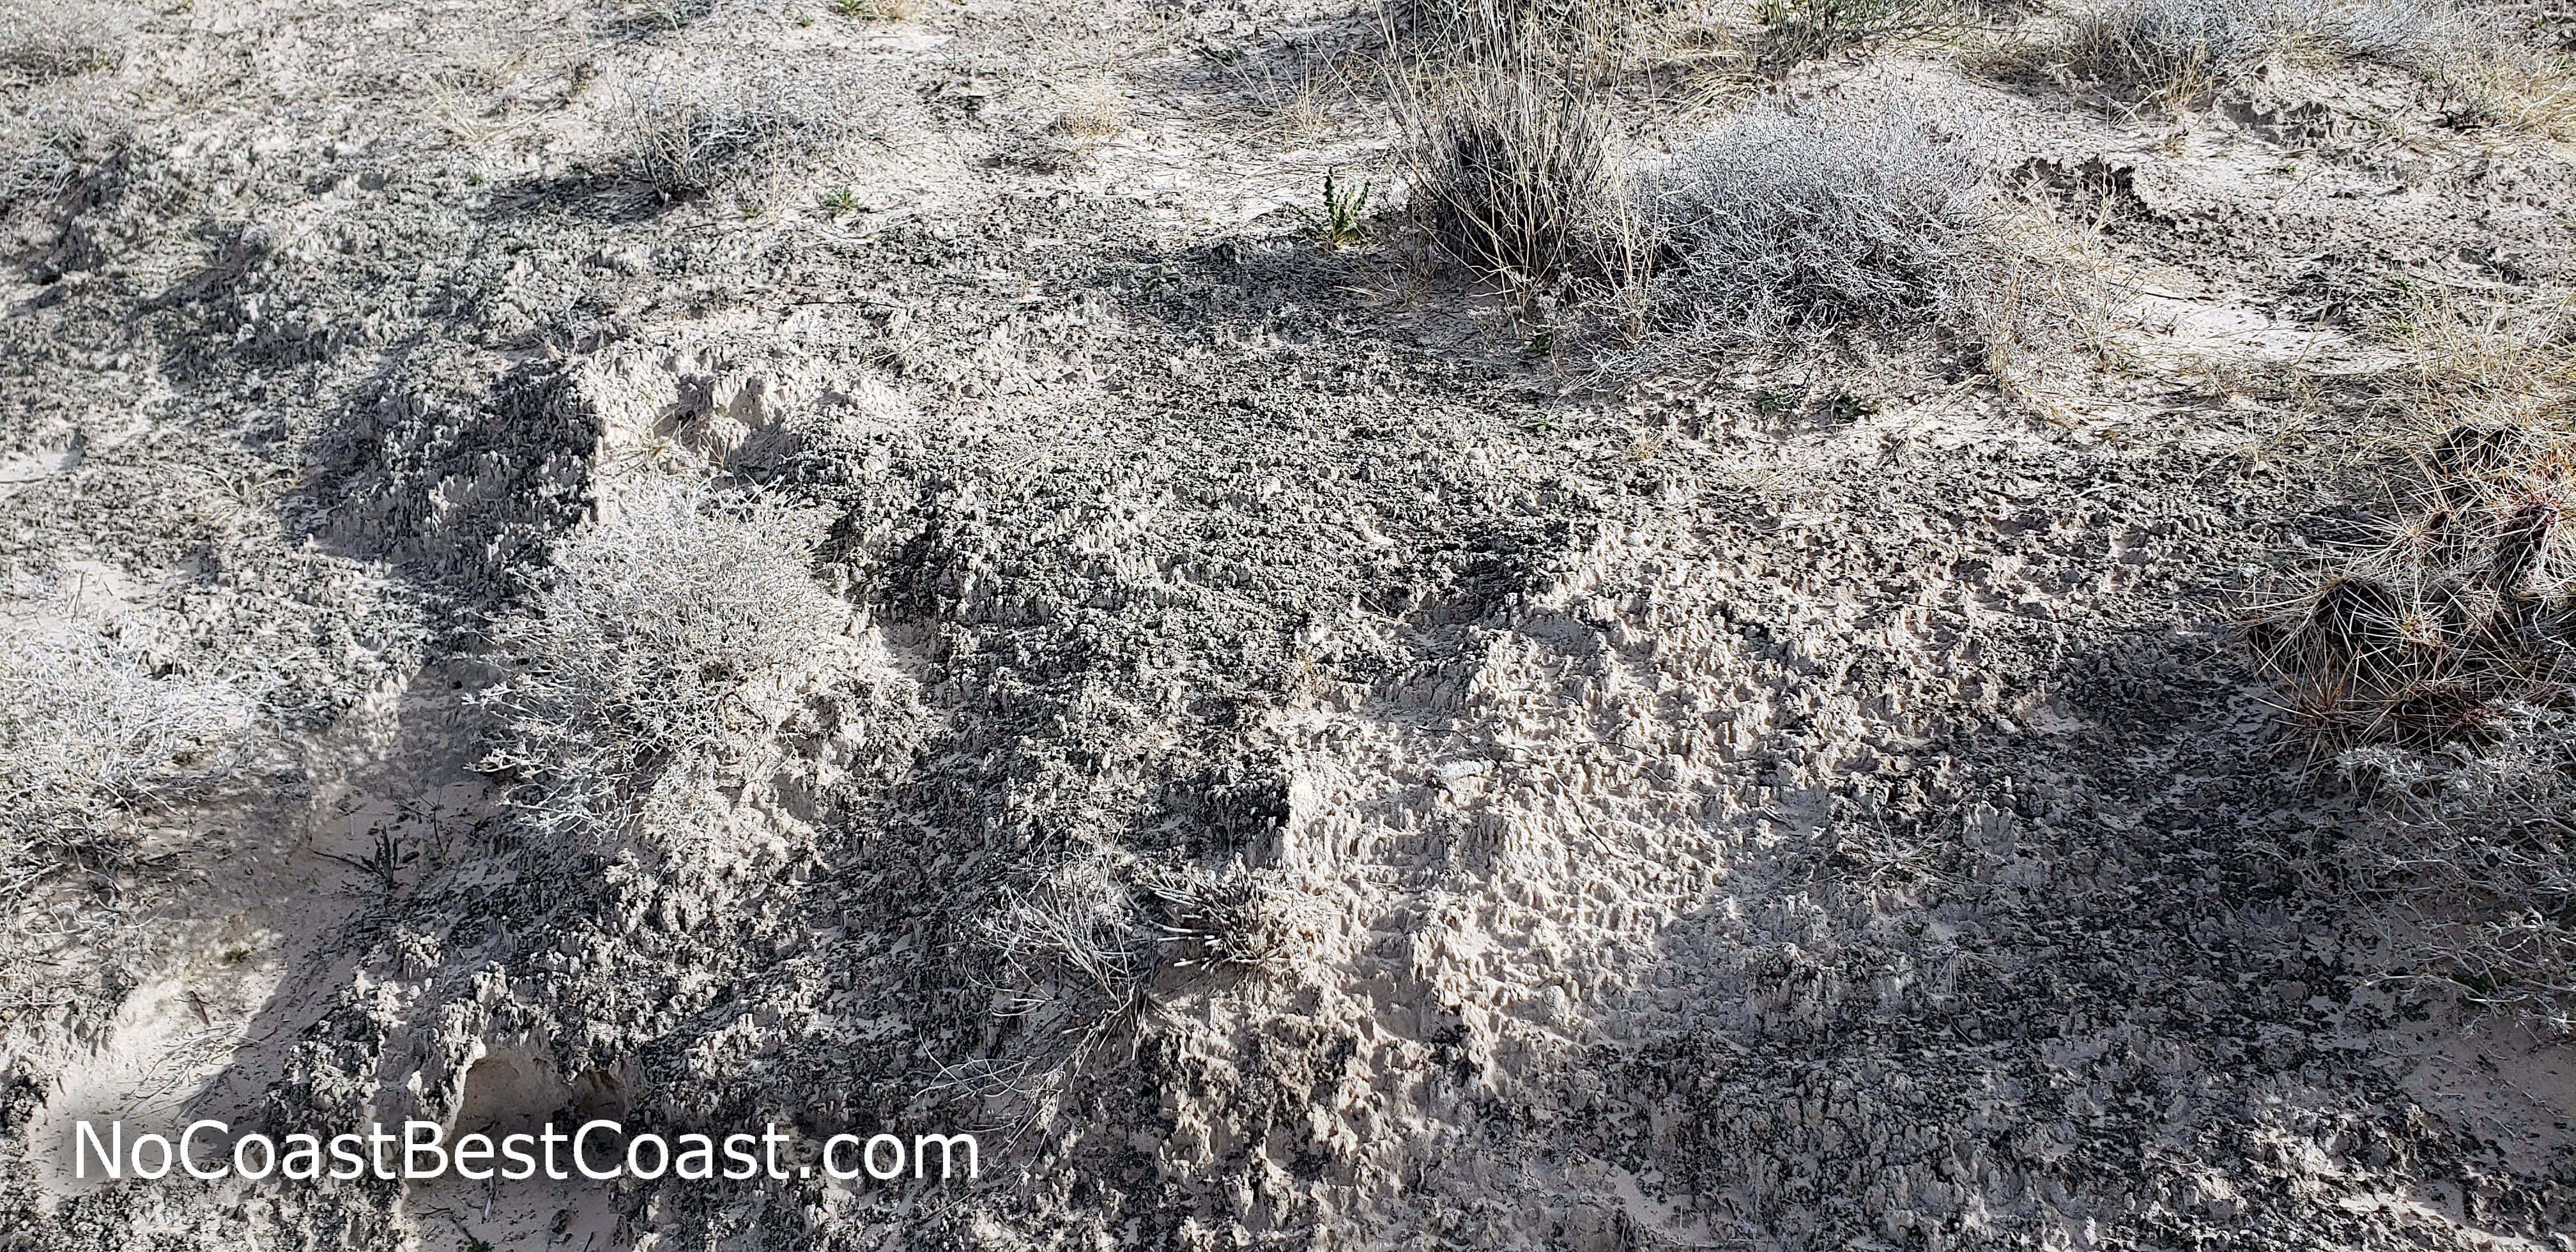 Cryptobiotic crust is a unique feature of the desert soil